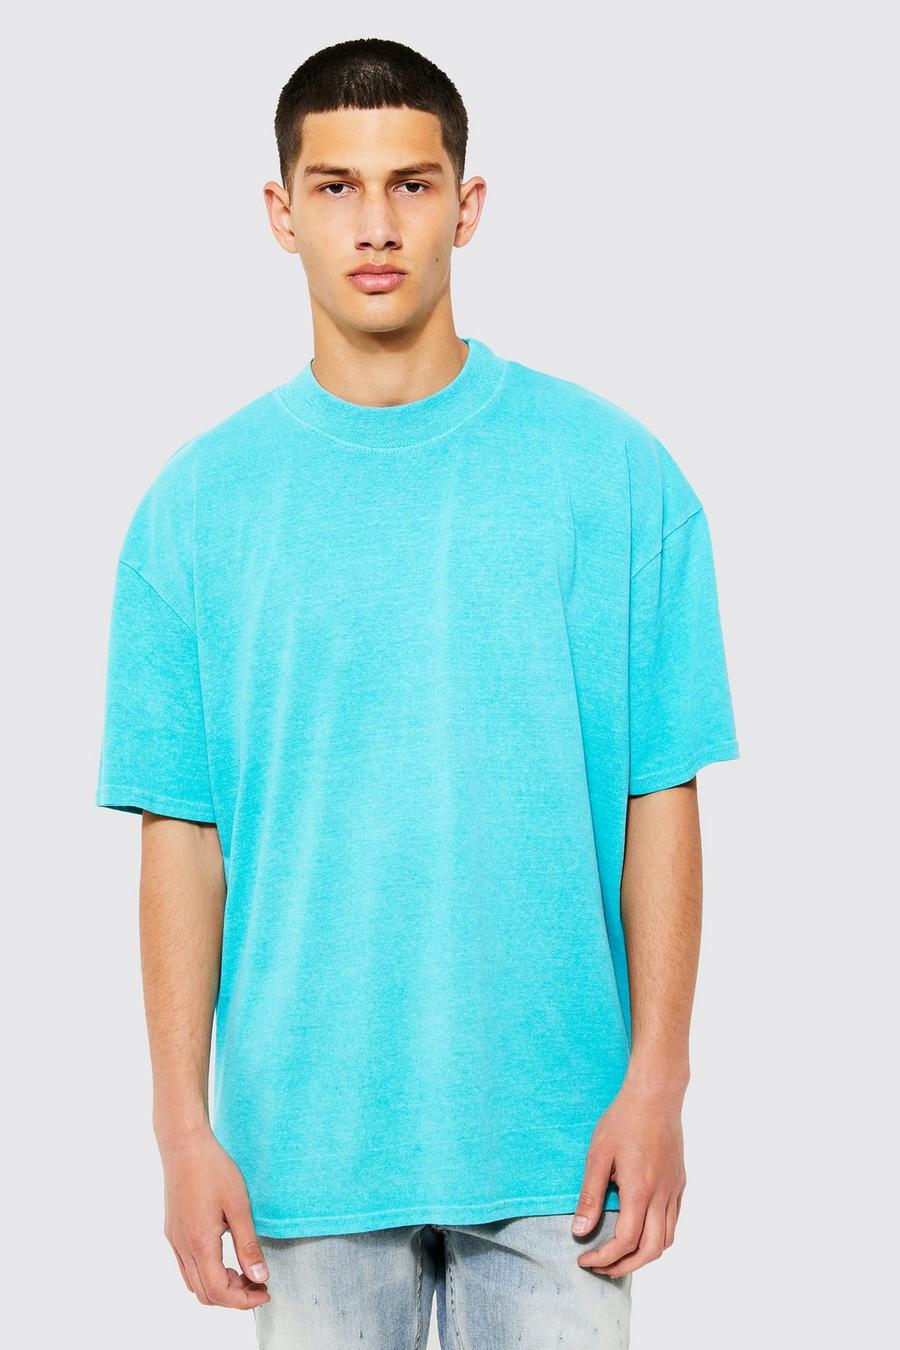 Aqua blau Oversized Overdye T-shirt